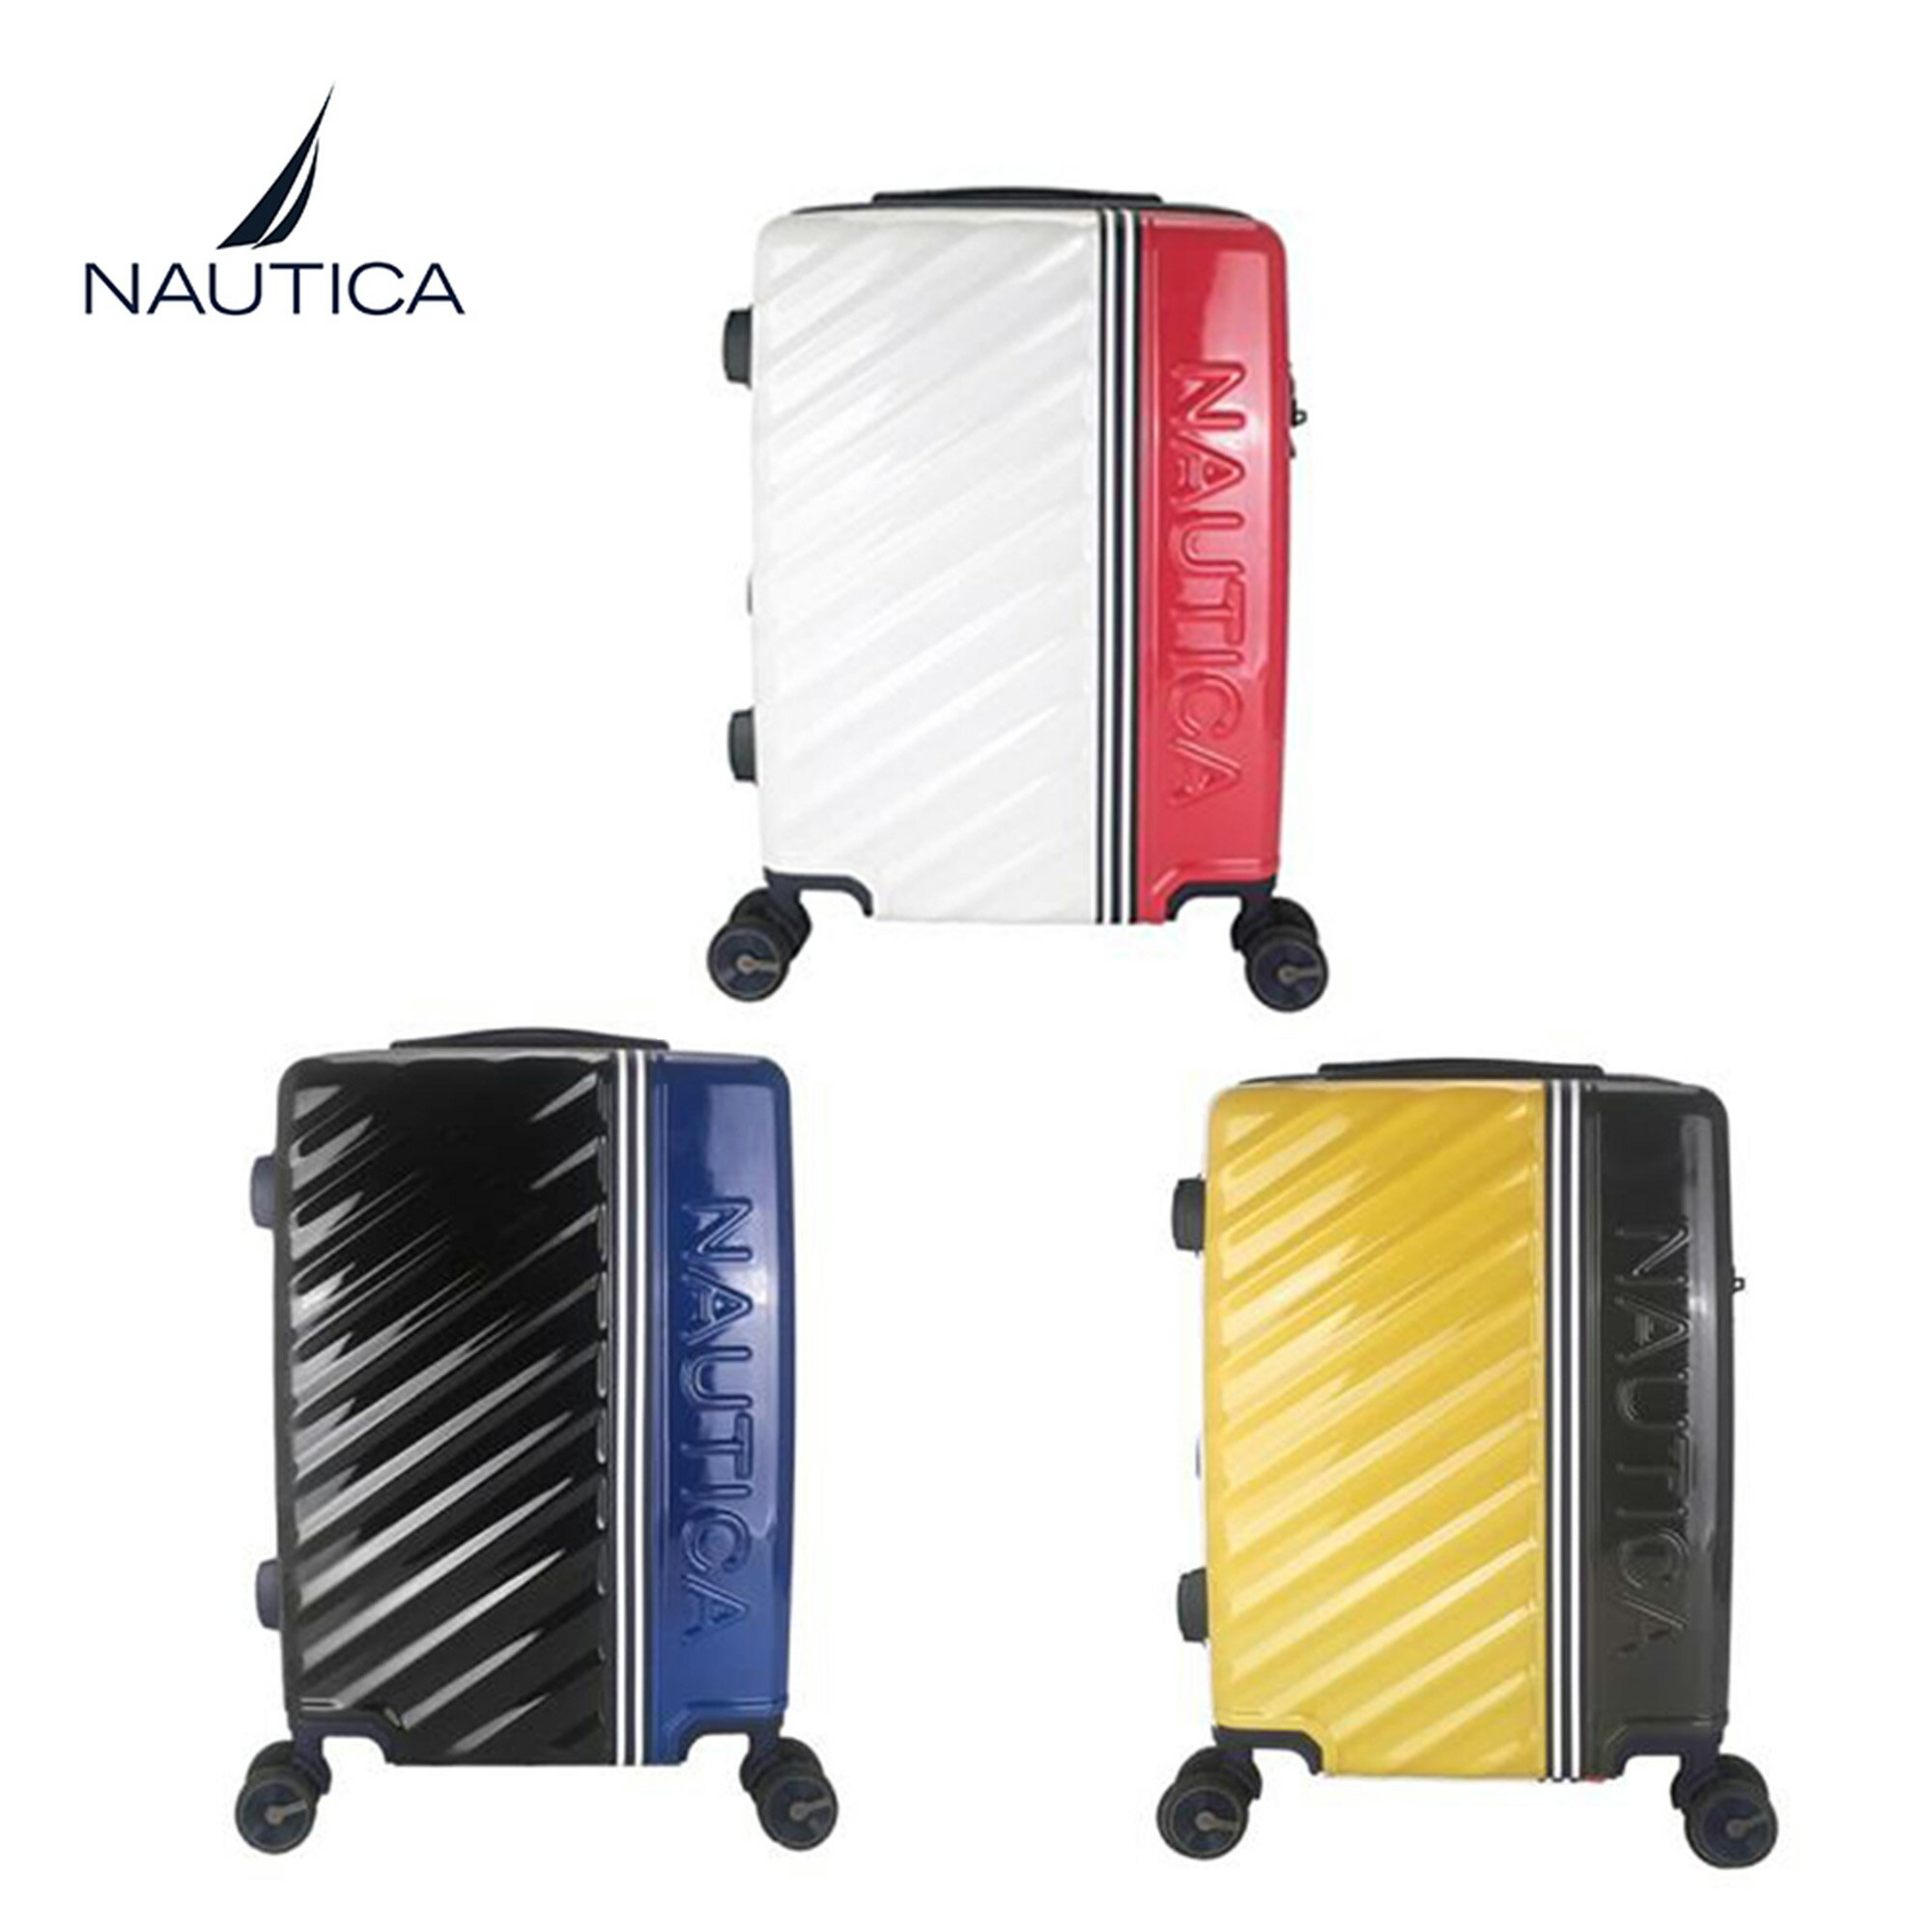 【NAUTICA】 24吋跳色經典防摔行李箱(ABS+PC防撞耐磨材質) | 旅行旅行箱 登機航空箱 商務辦公箱